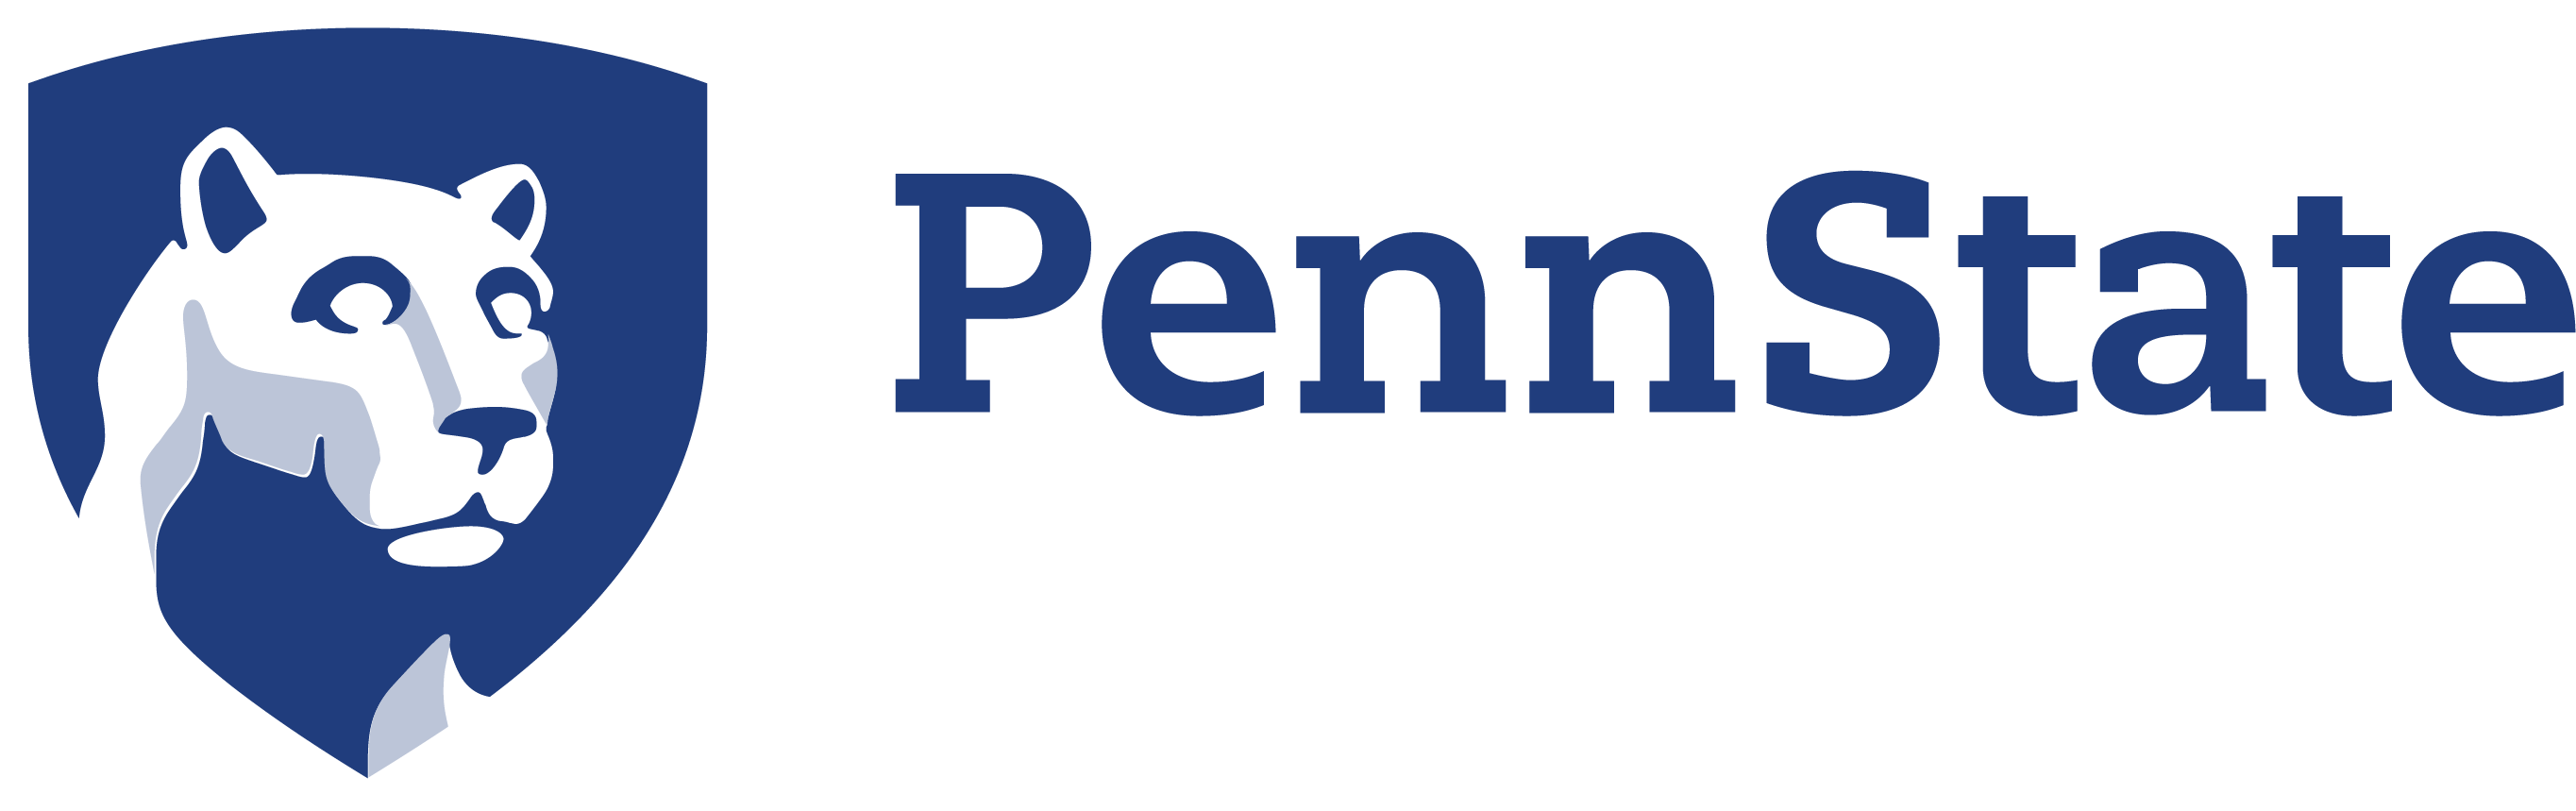 PSU Logo   Penn State   Pennsylvania State University png